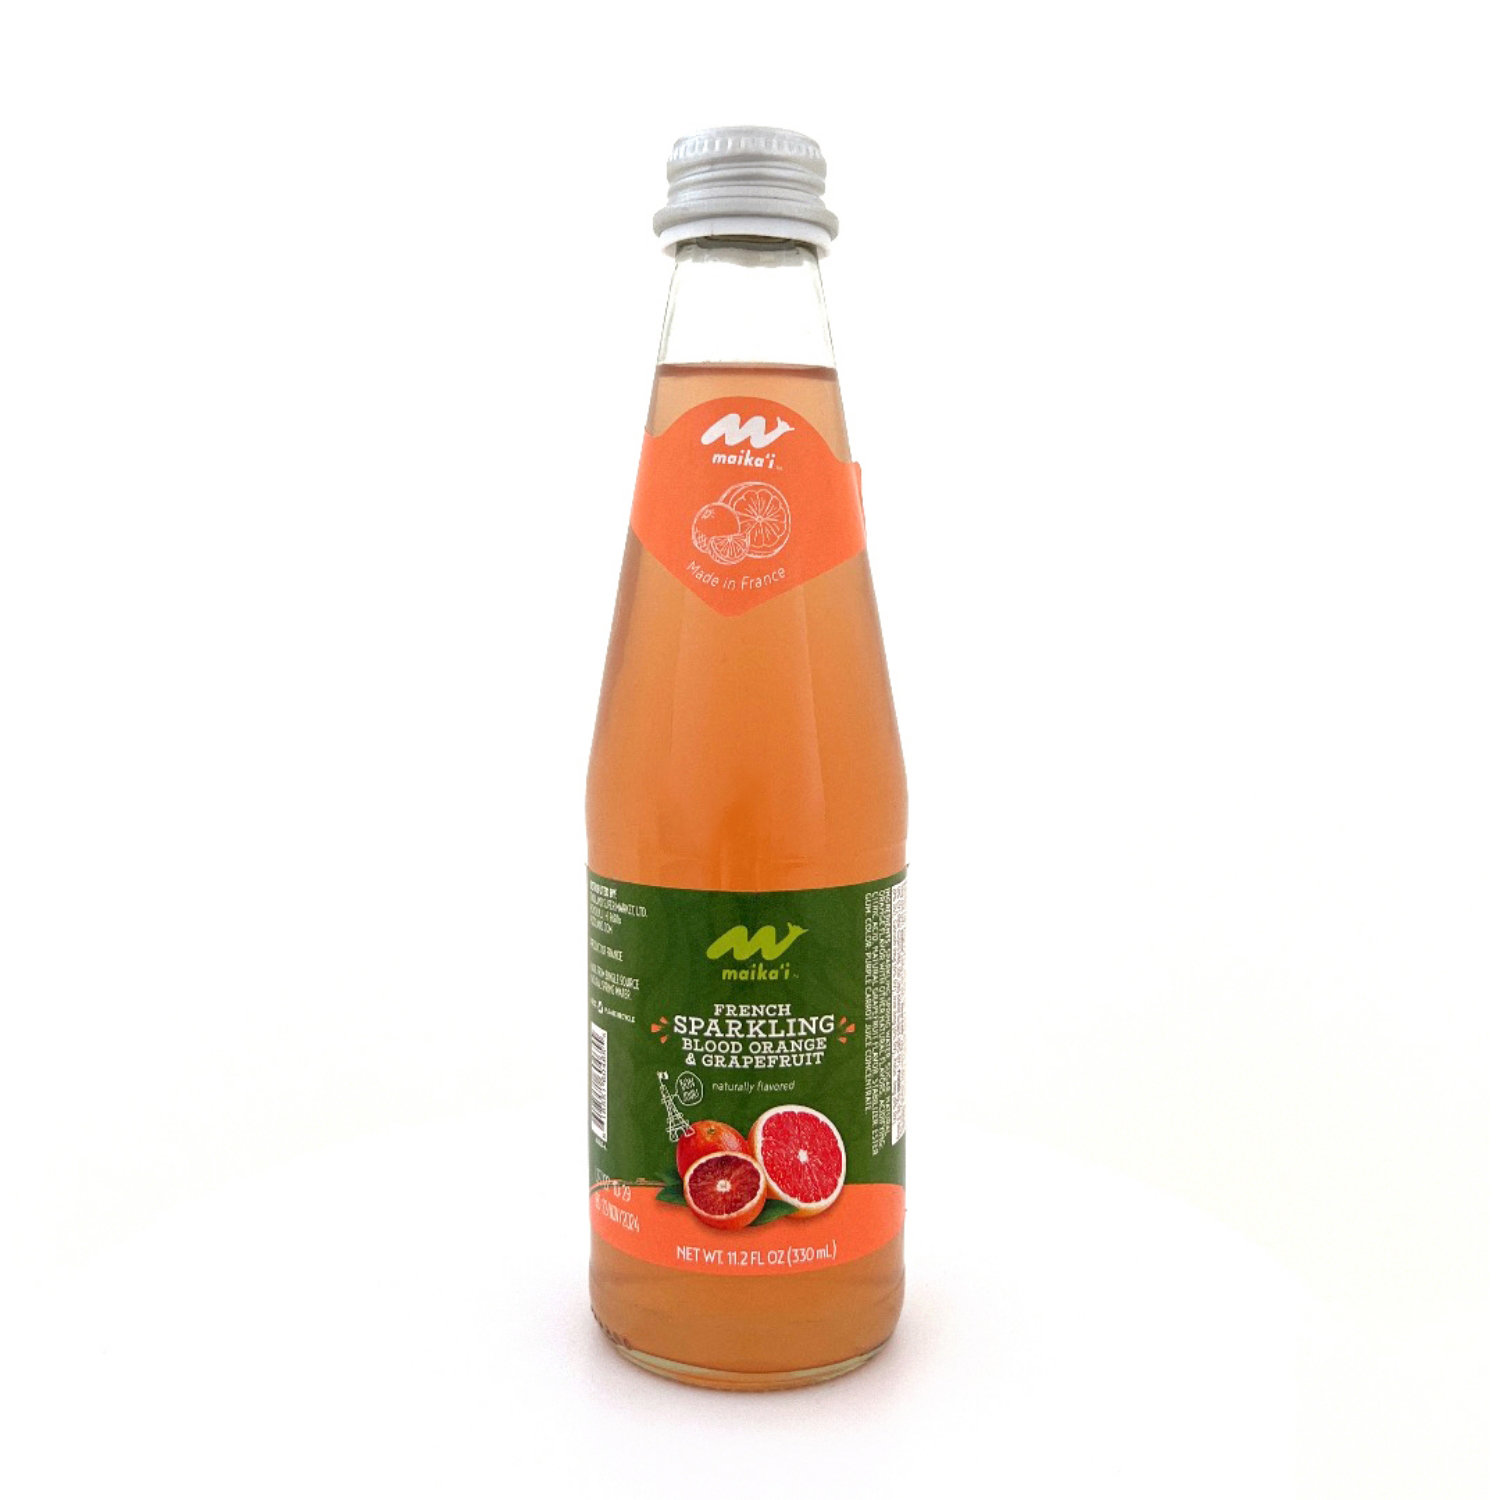 Looza Pear Juice Drink 33.8 oz Glass Bottles - Pack of 6 